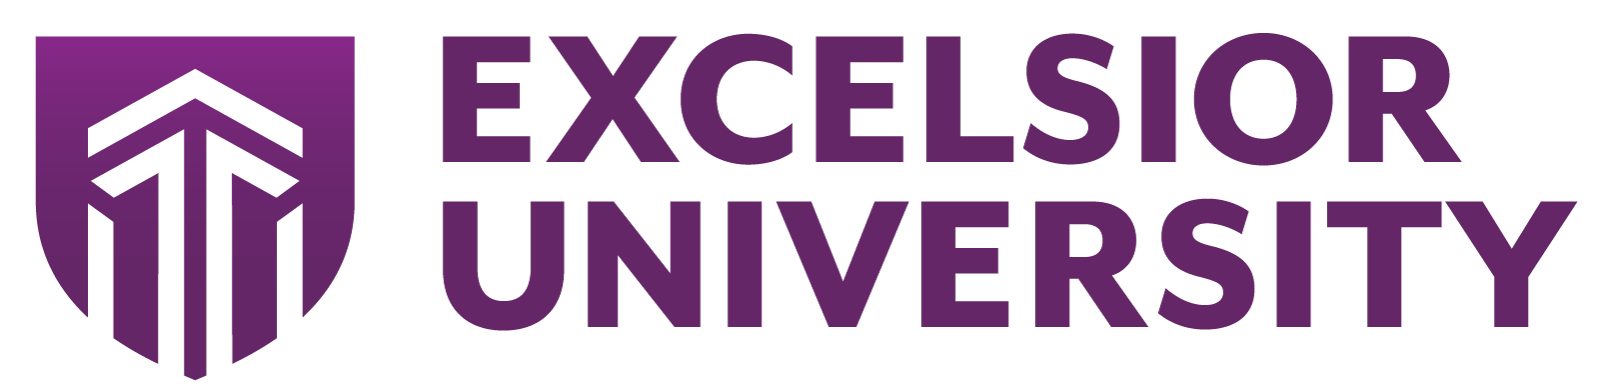 Excelsior University Logo in purple